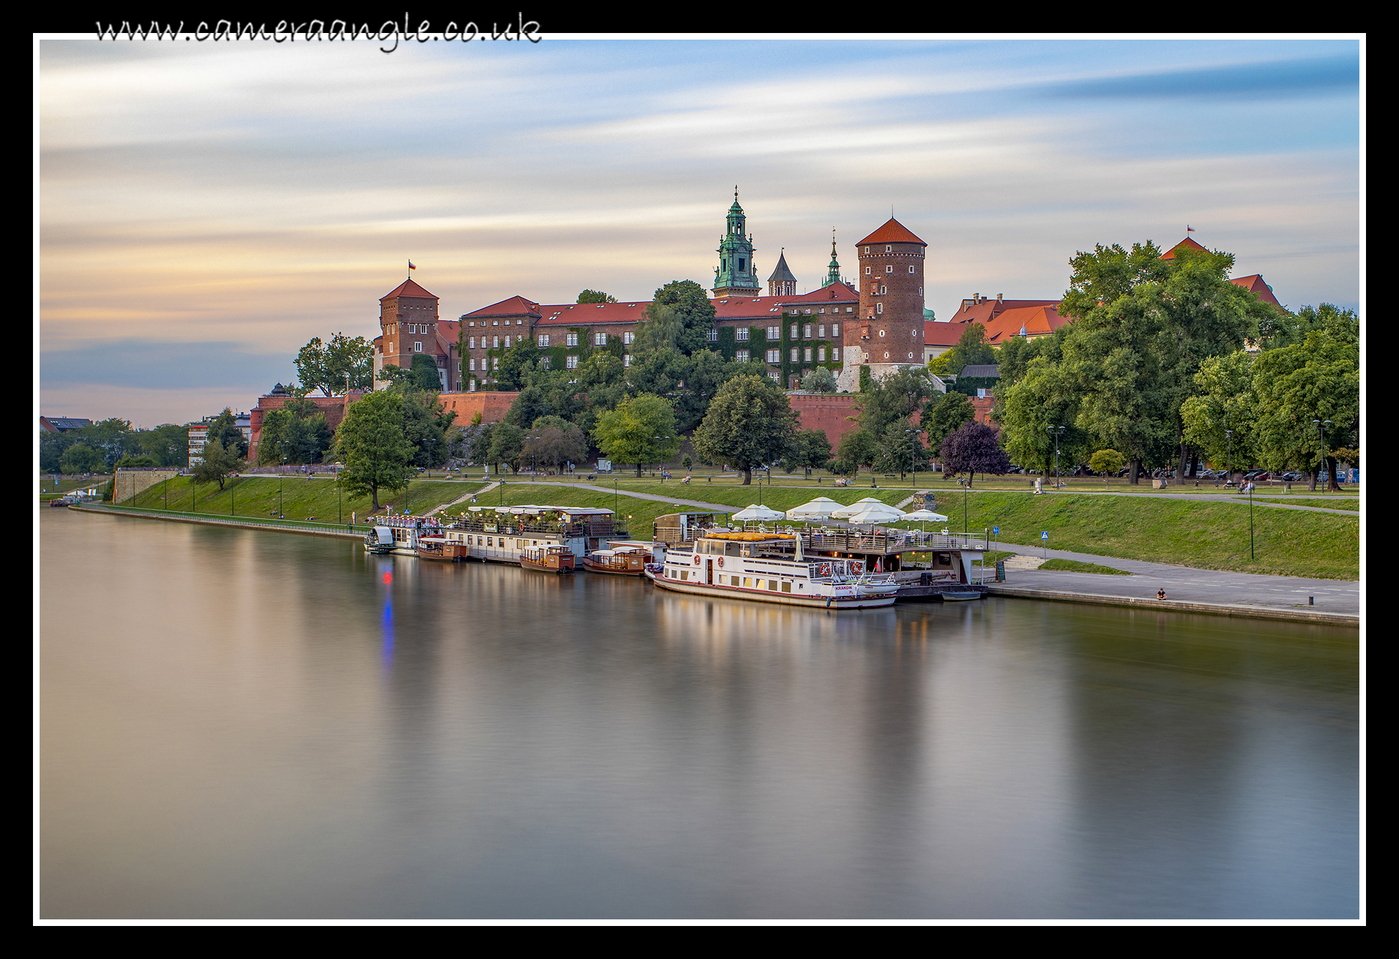 Vistula River & Wawel Castle
Keywords: Vistula River & Wawel Castle 2019 Krakow